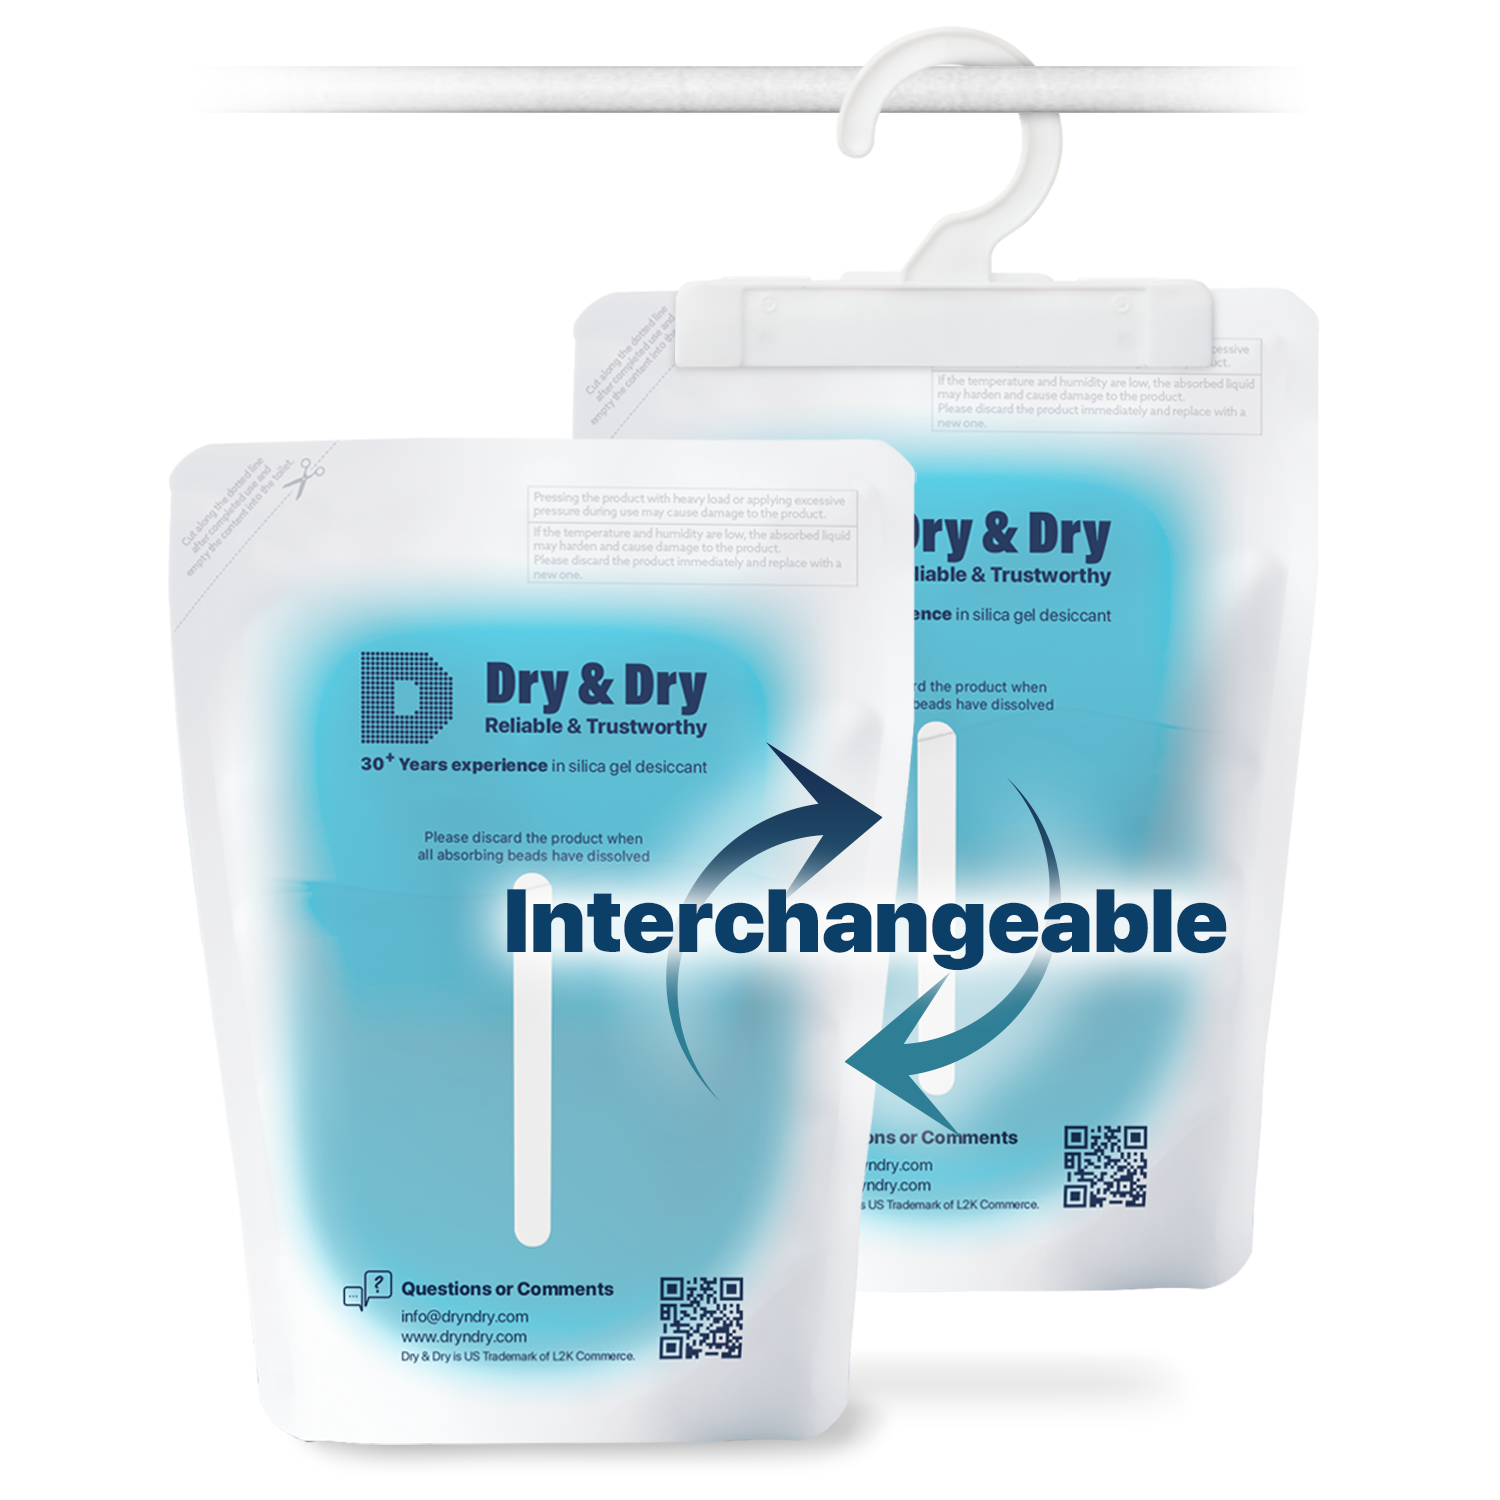 Dry & Dry 30 Packs Premium Standing or Hanging Hybrid Moisture Absorbers